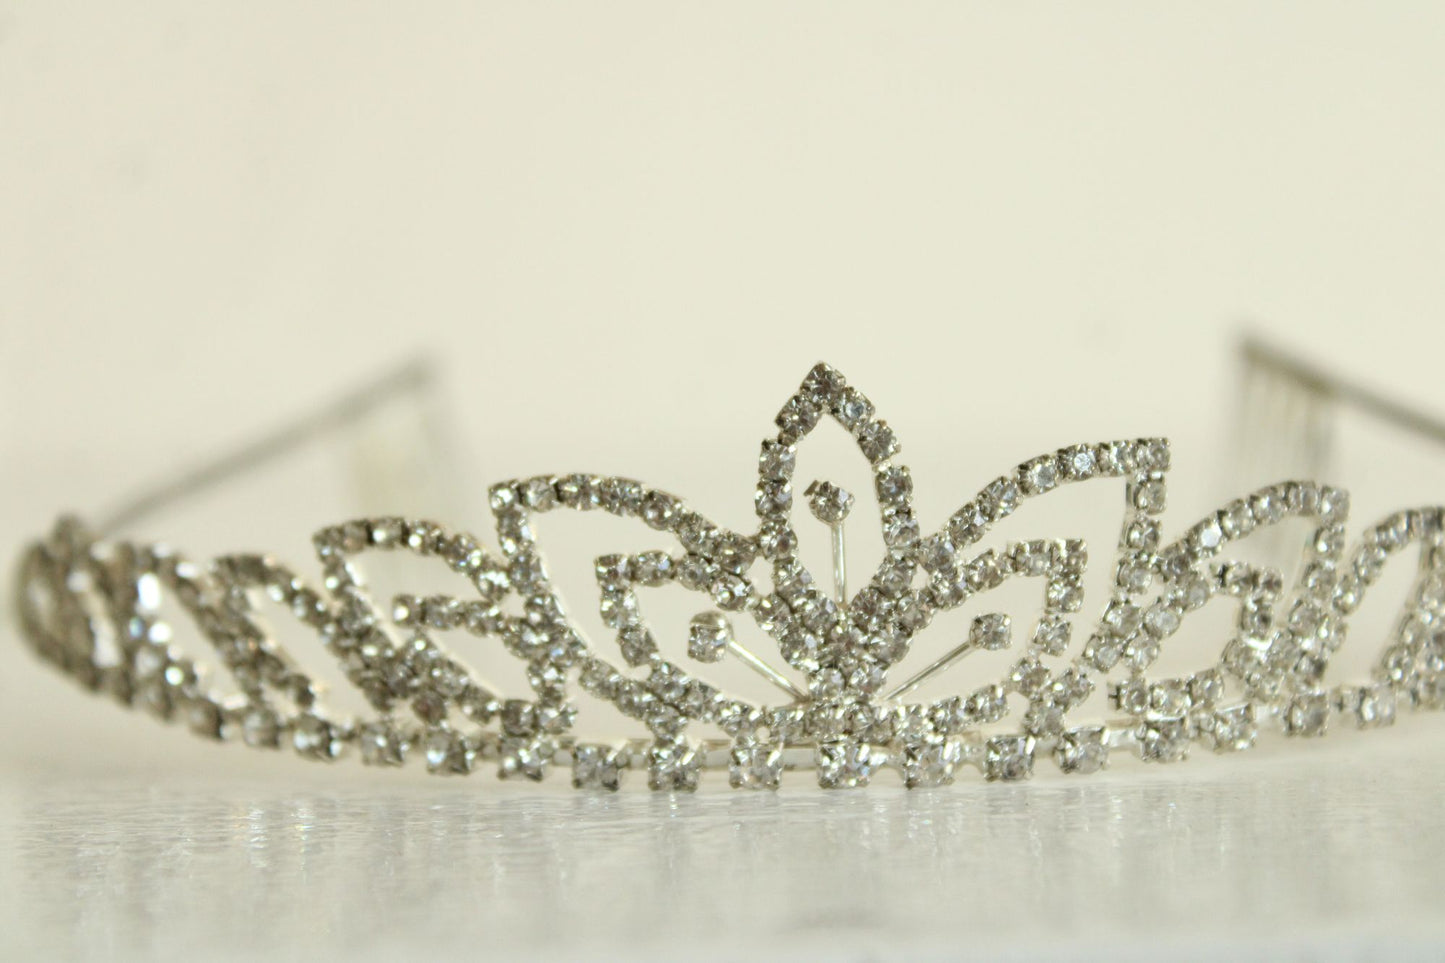 Tiara for Women, Crystal Rhinestone Bridal Or Prom Crown